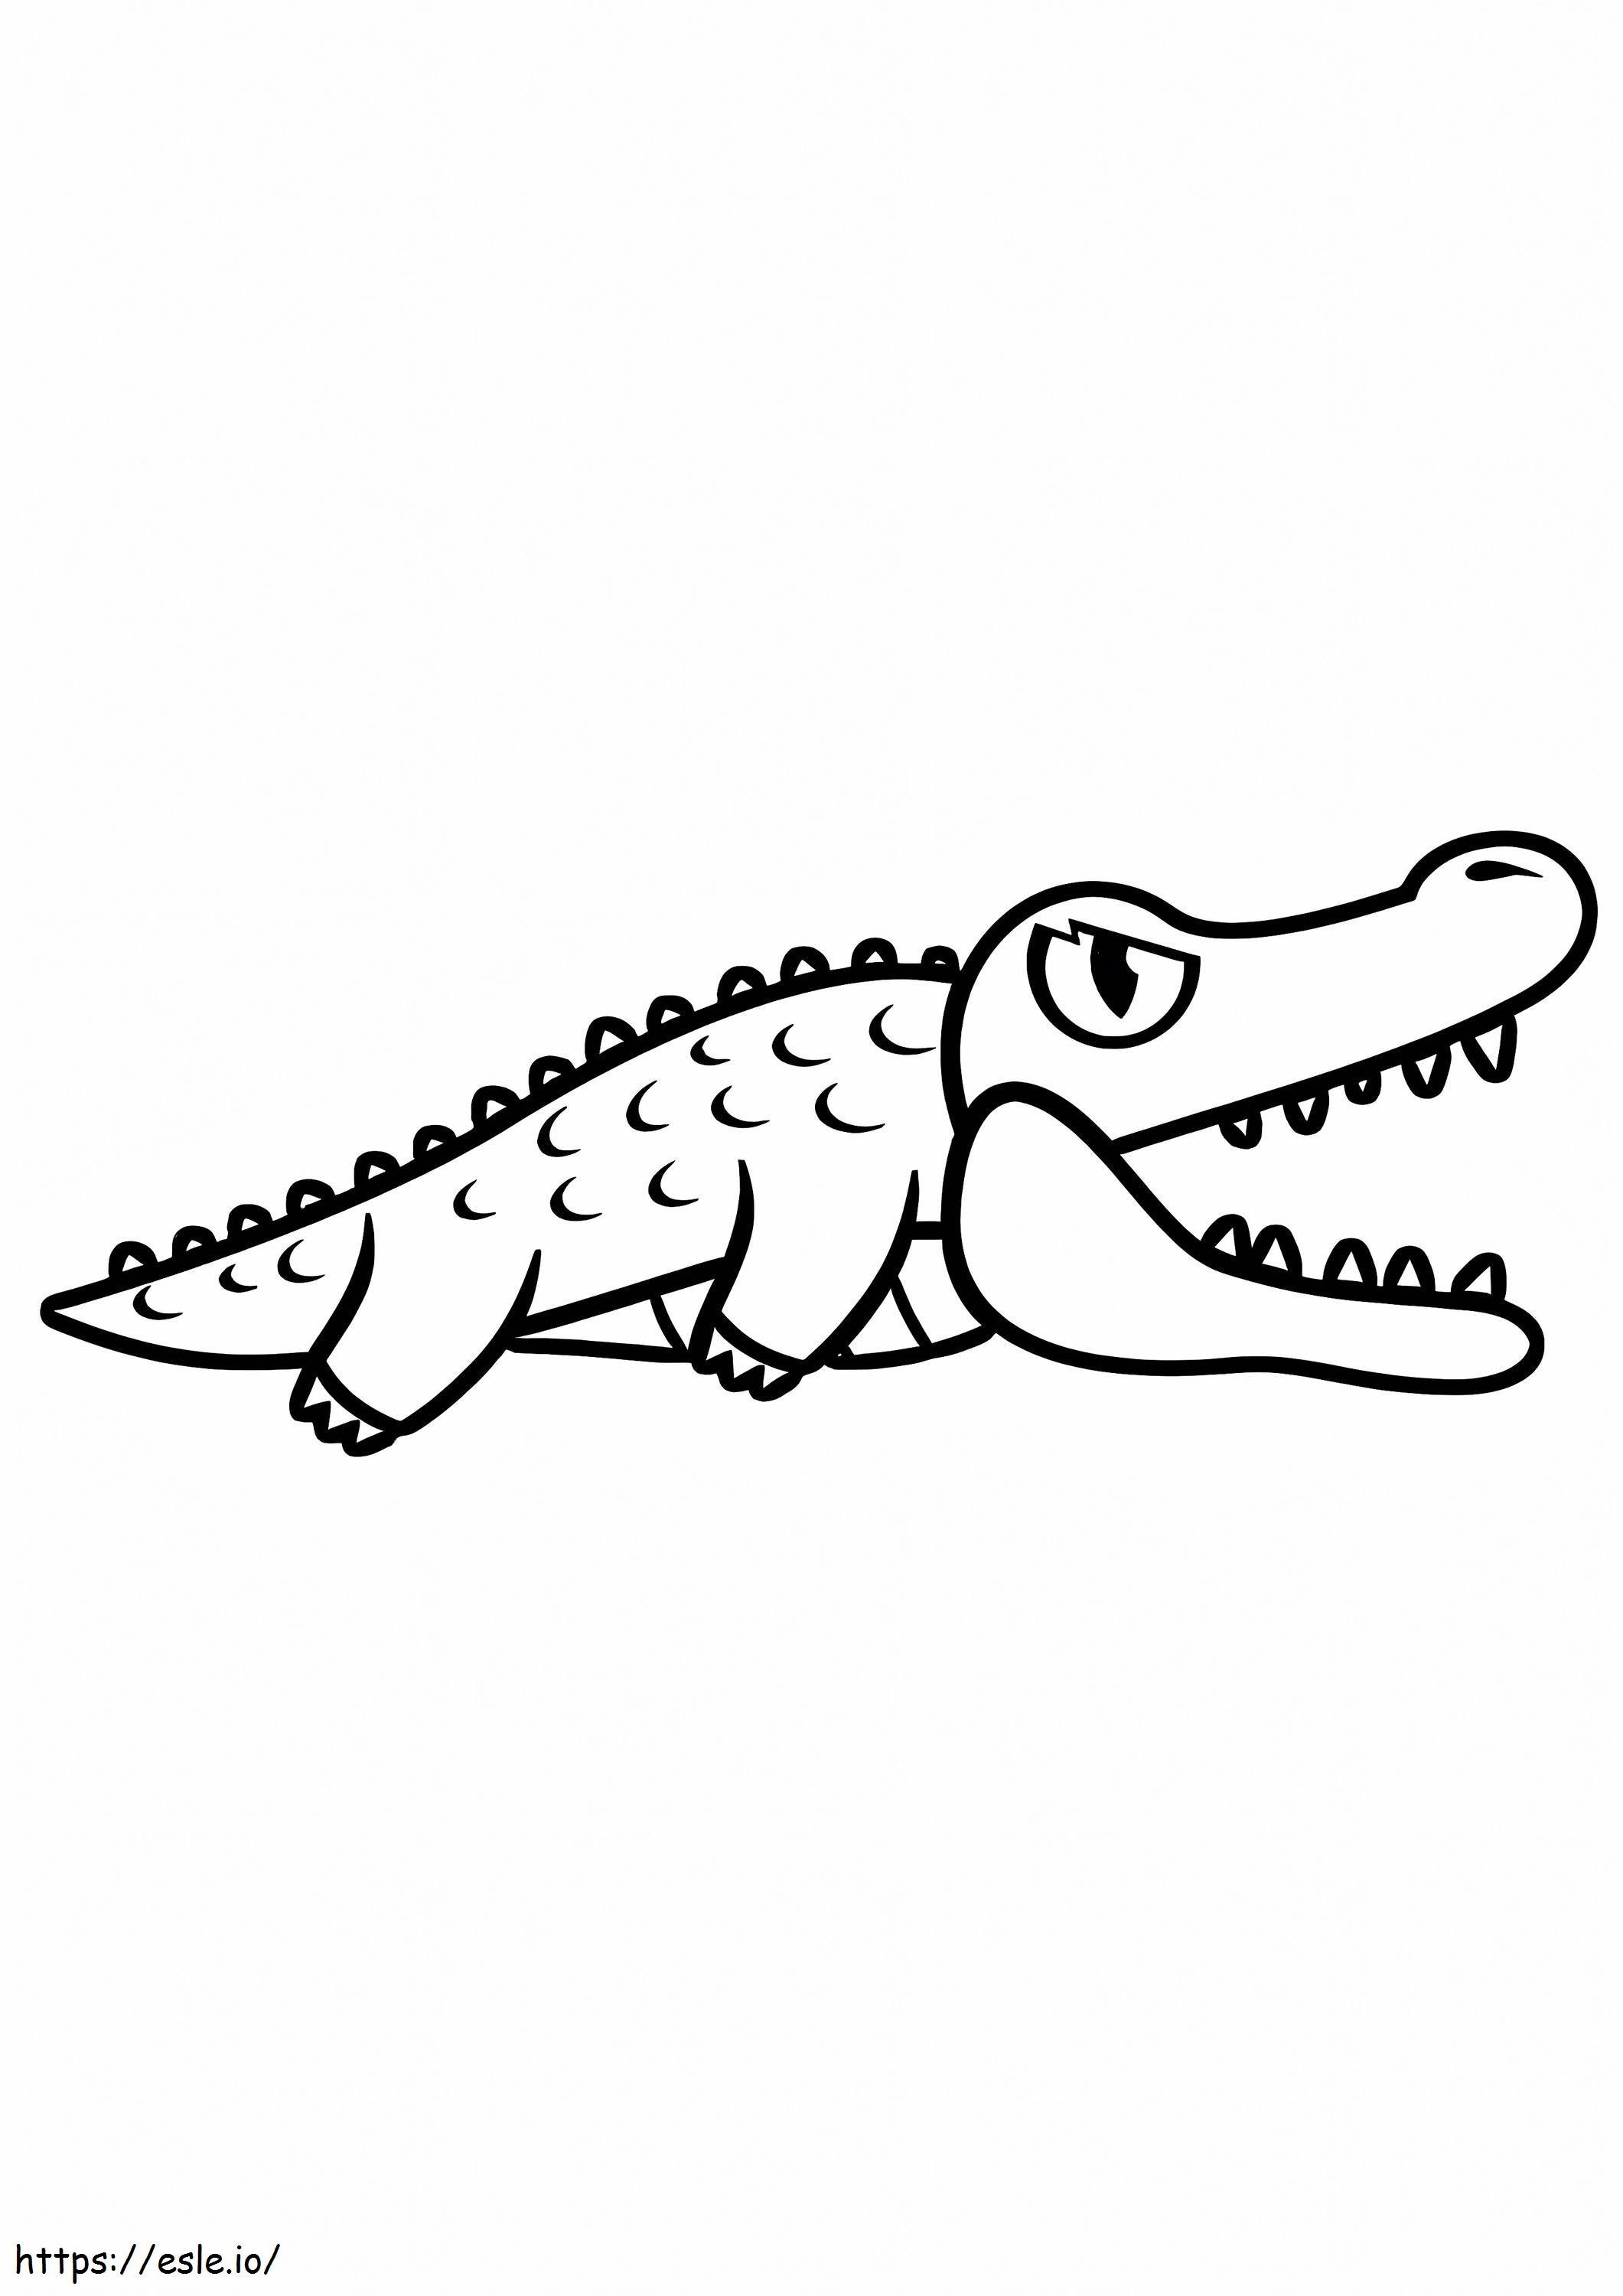 Chibi Crocodile coloring page